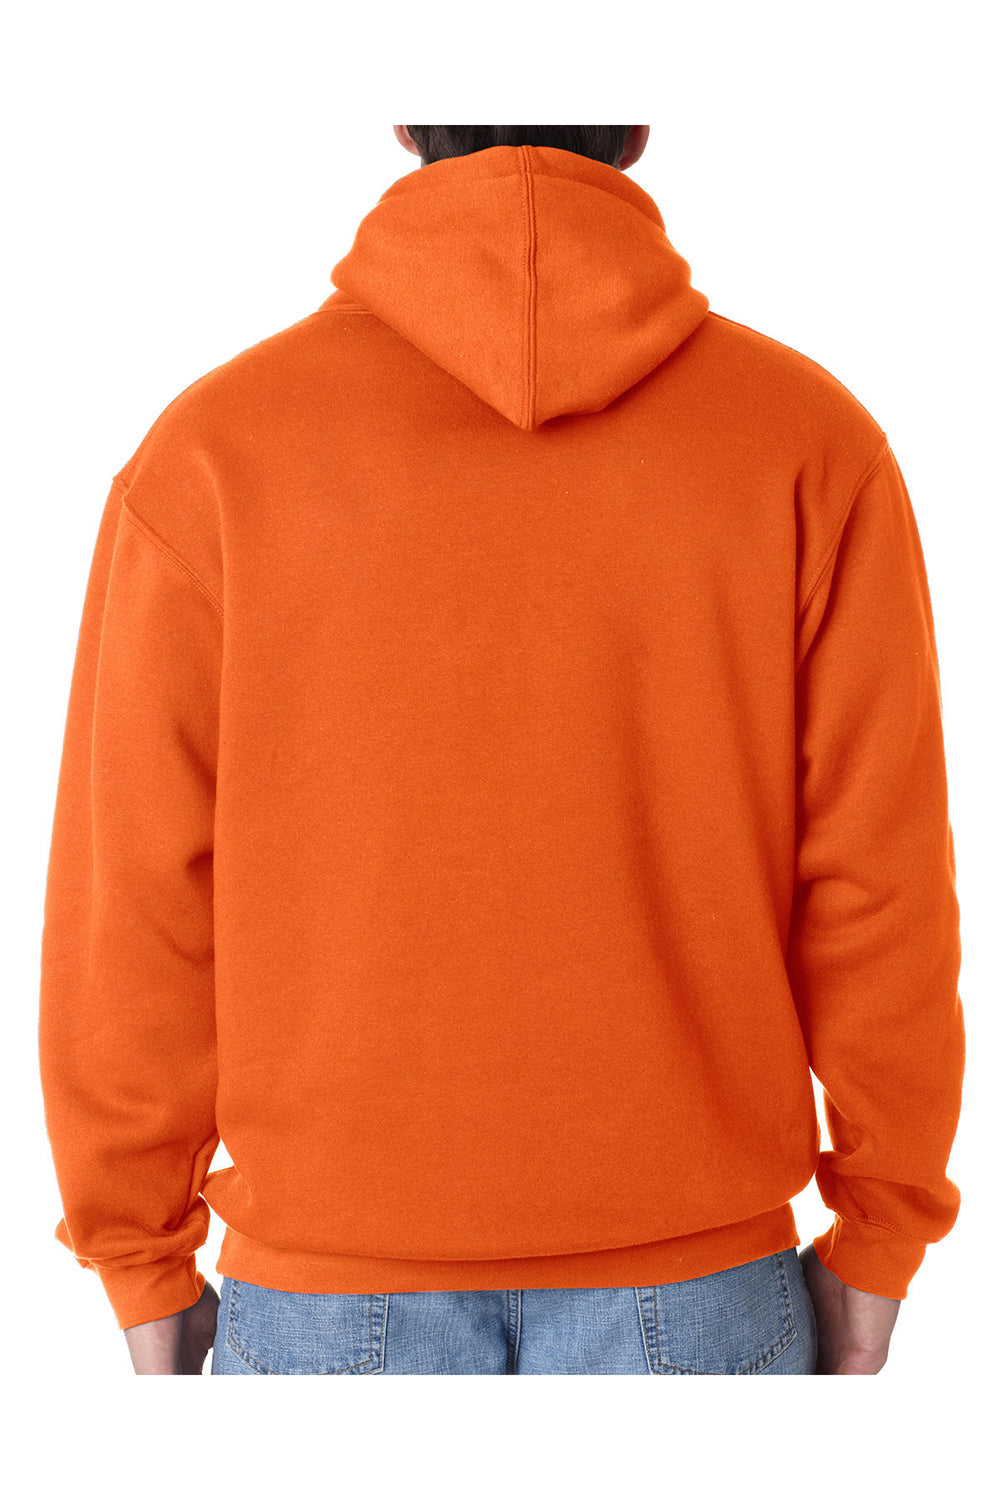 Bayside BA960 Mens USA Made Hooded Sweatshirt Hoodie Bright Orange Model Back